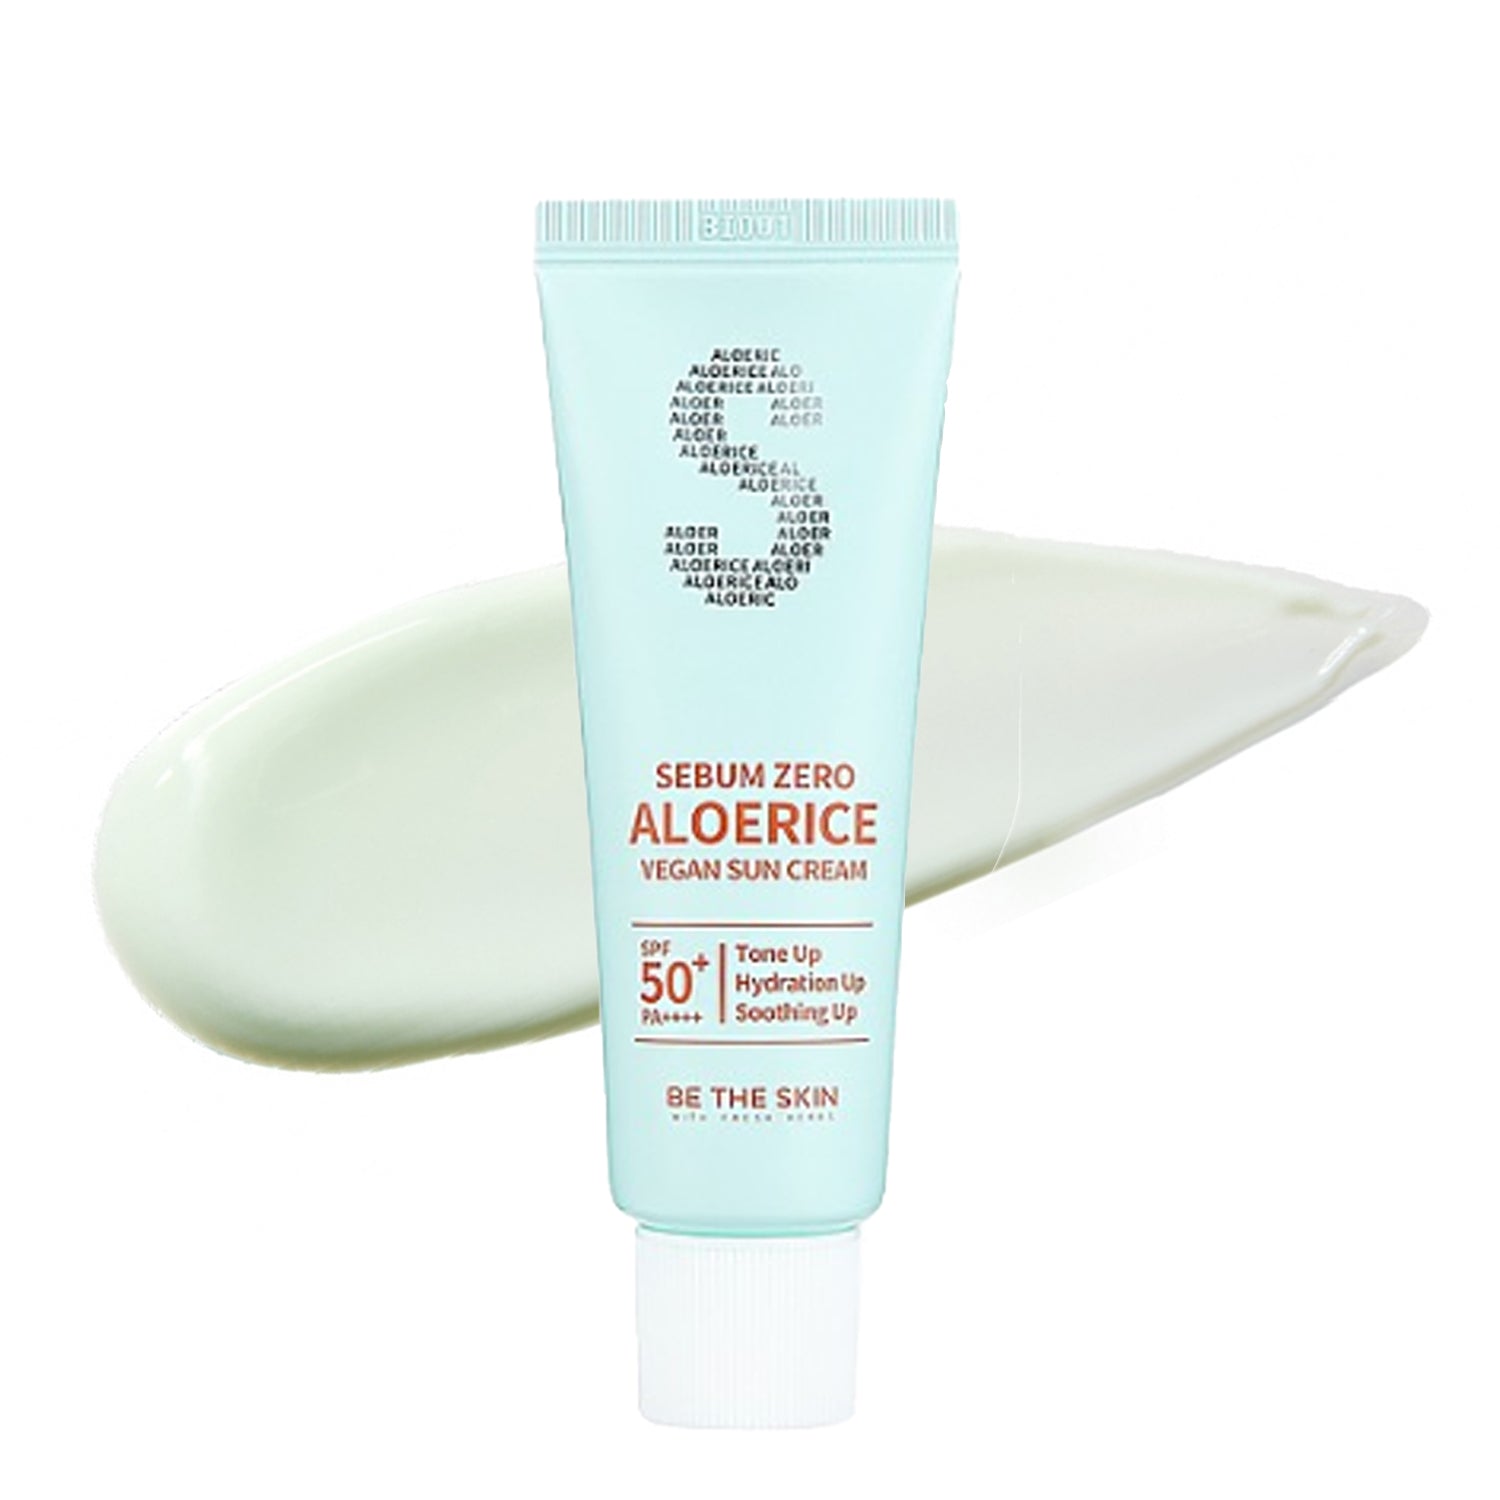 BE THE SKIN - Sebum Zero Aloerice Vegan Sun Cream SPF 50+, PA++++ 50ml